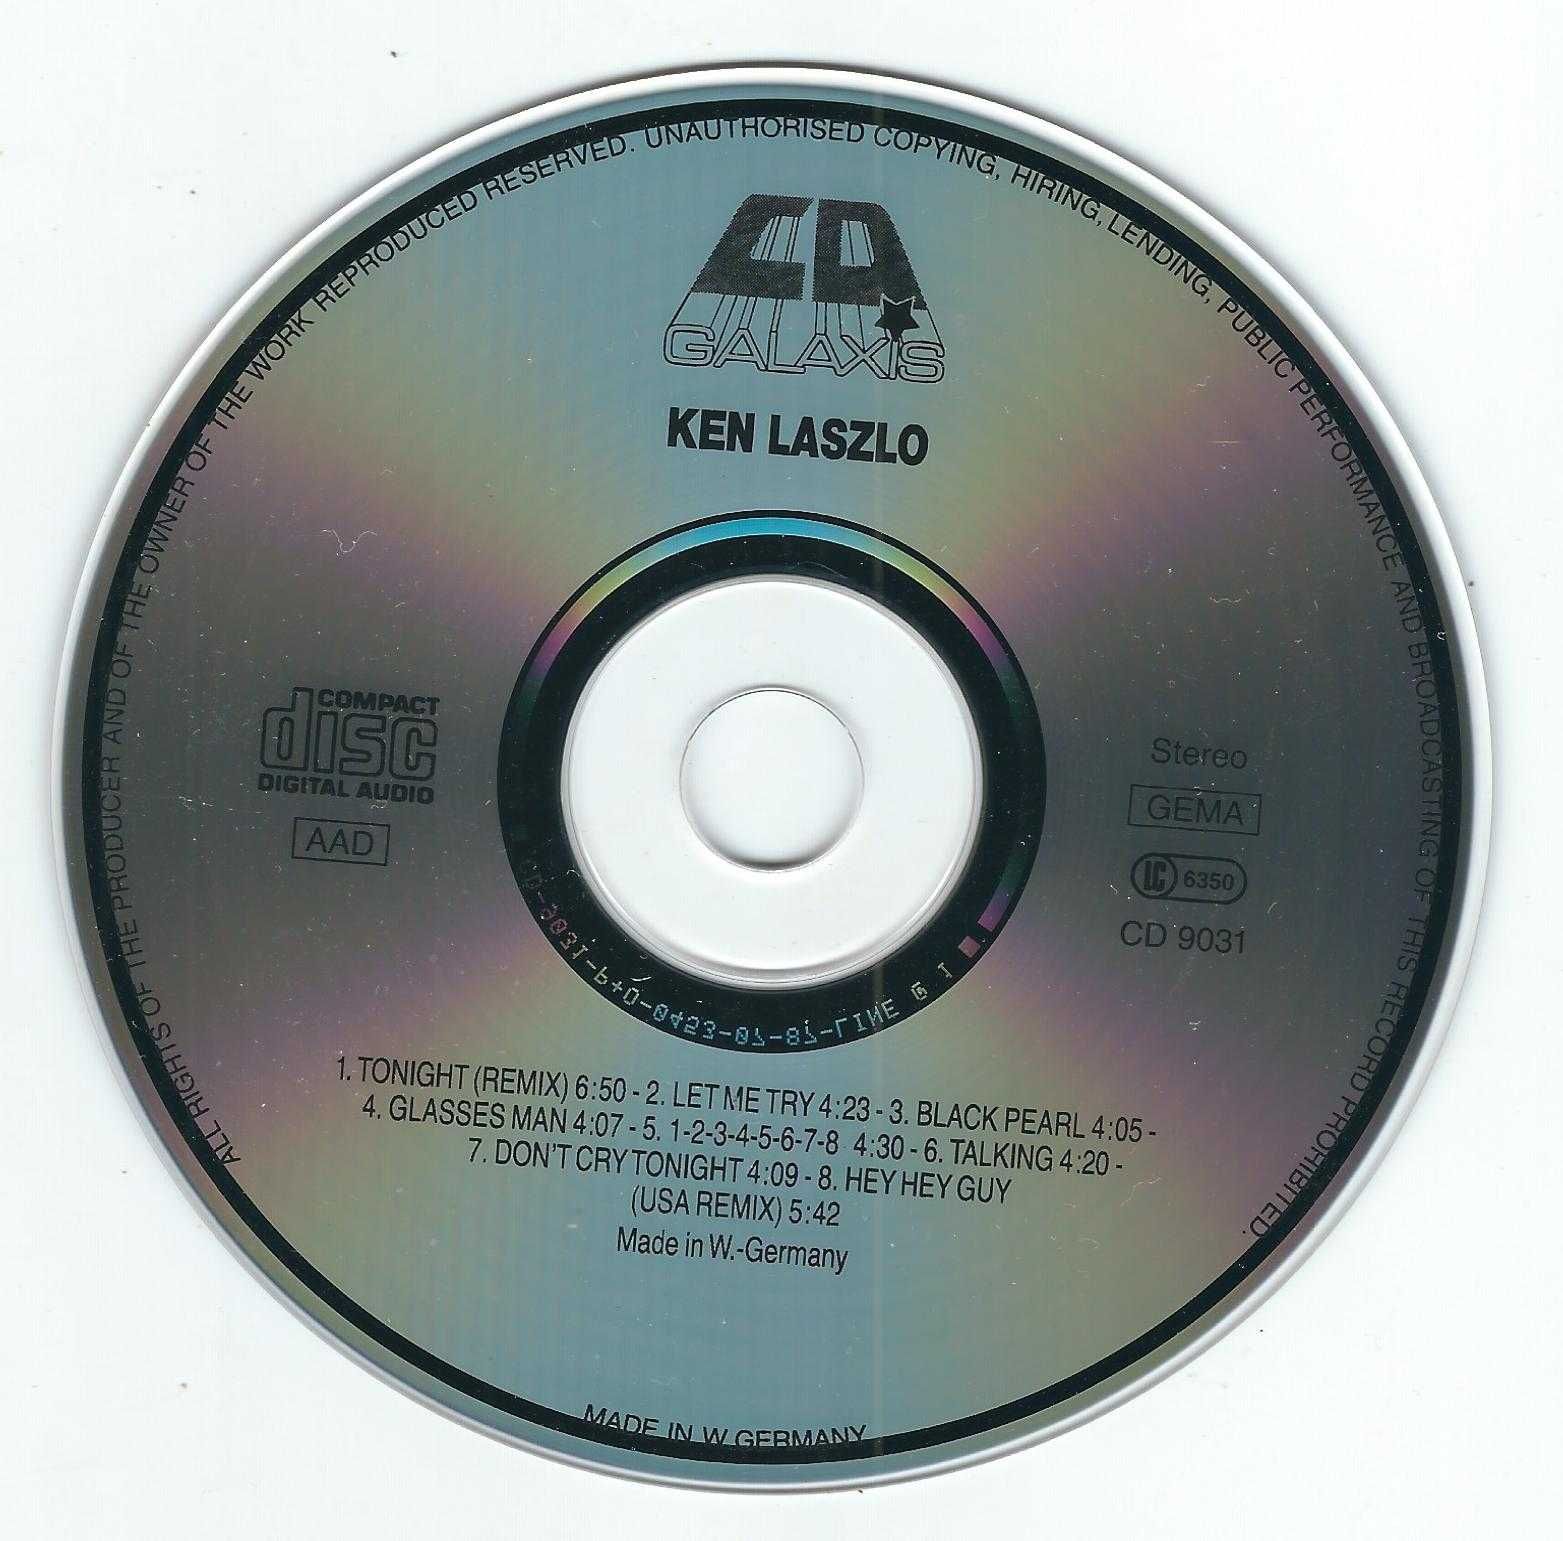 CD Ken Laszlo - Ken Laszlo (1987) (Galaxis)